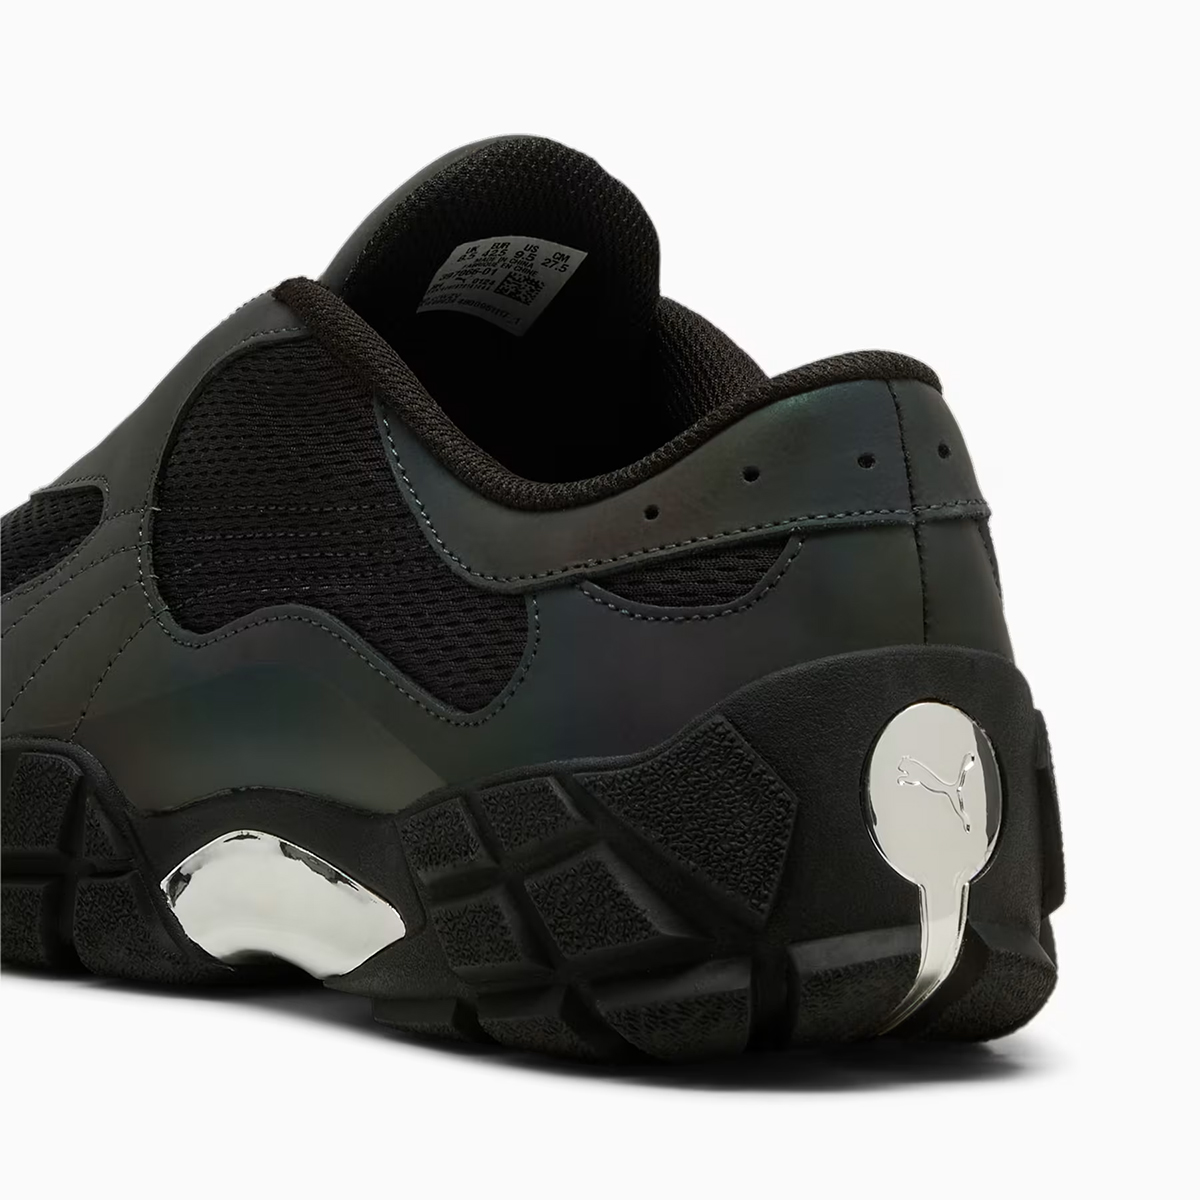 Puma Skepta Shoes Release Date 3